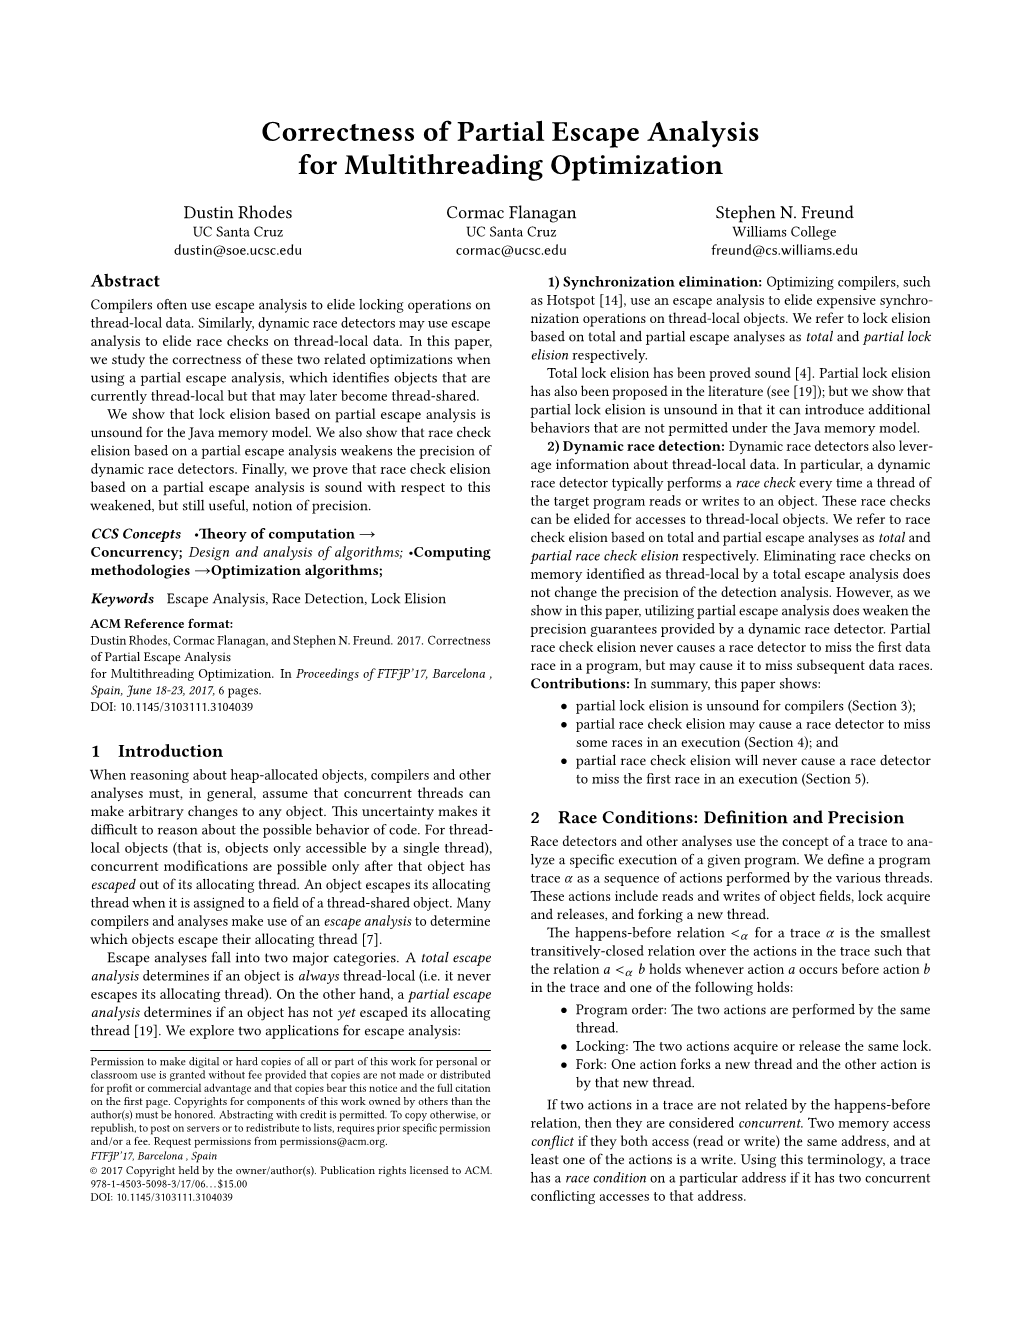 Correctness of Partial Escape Analysis for Multithreading Optimization